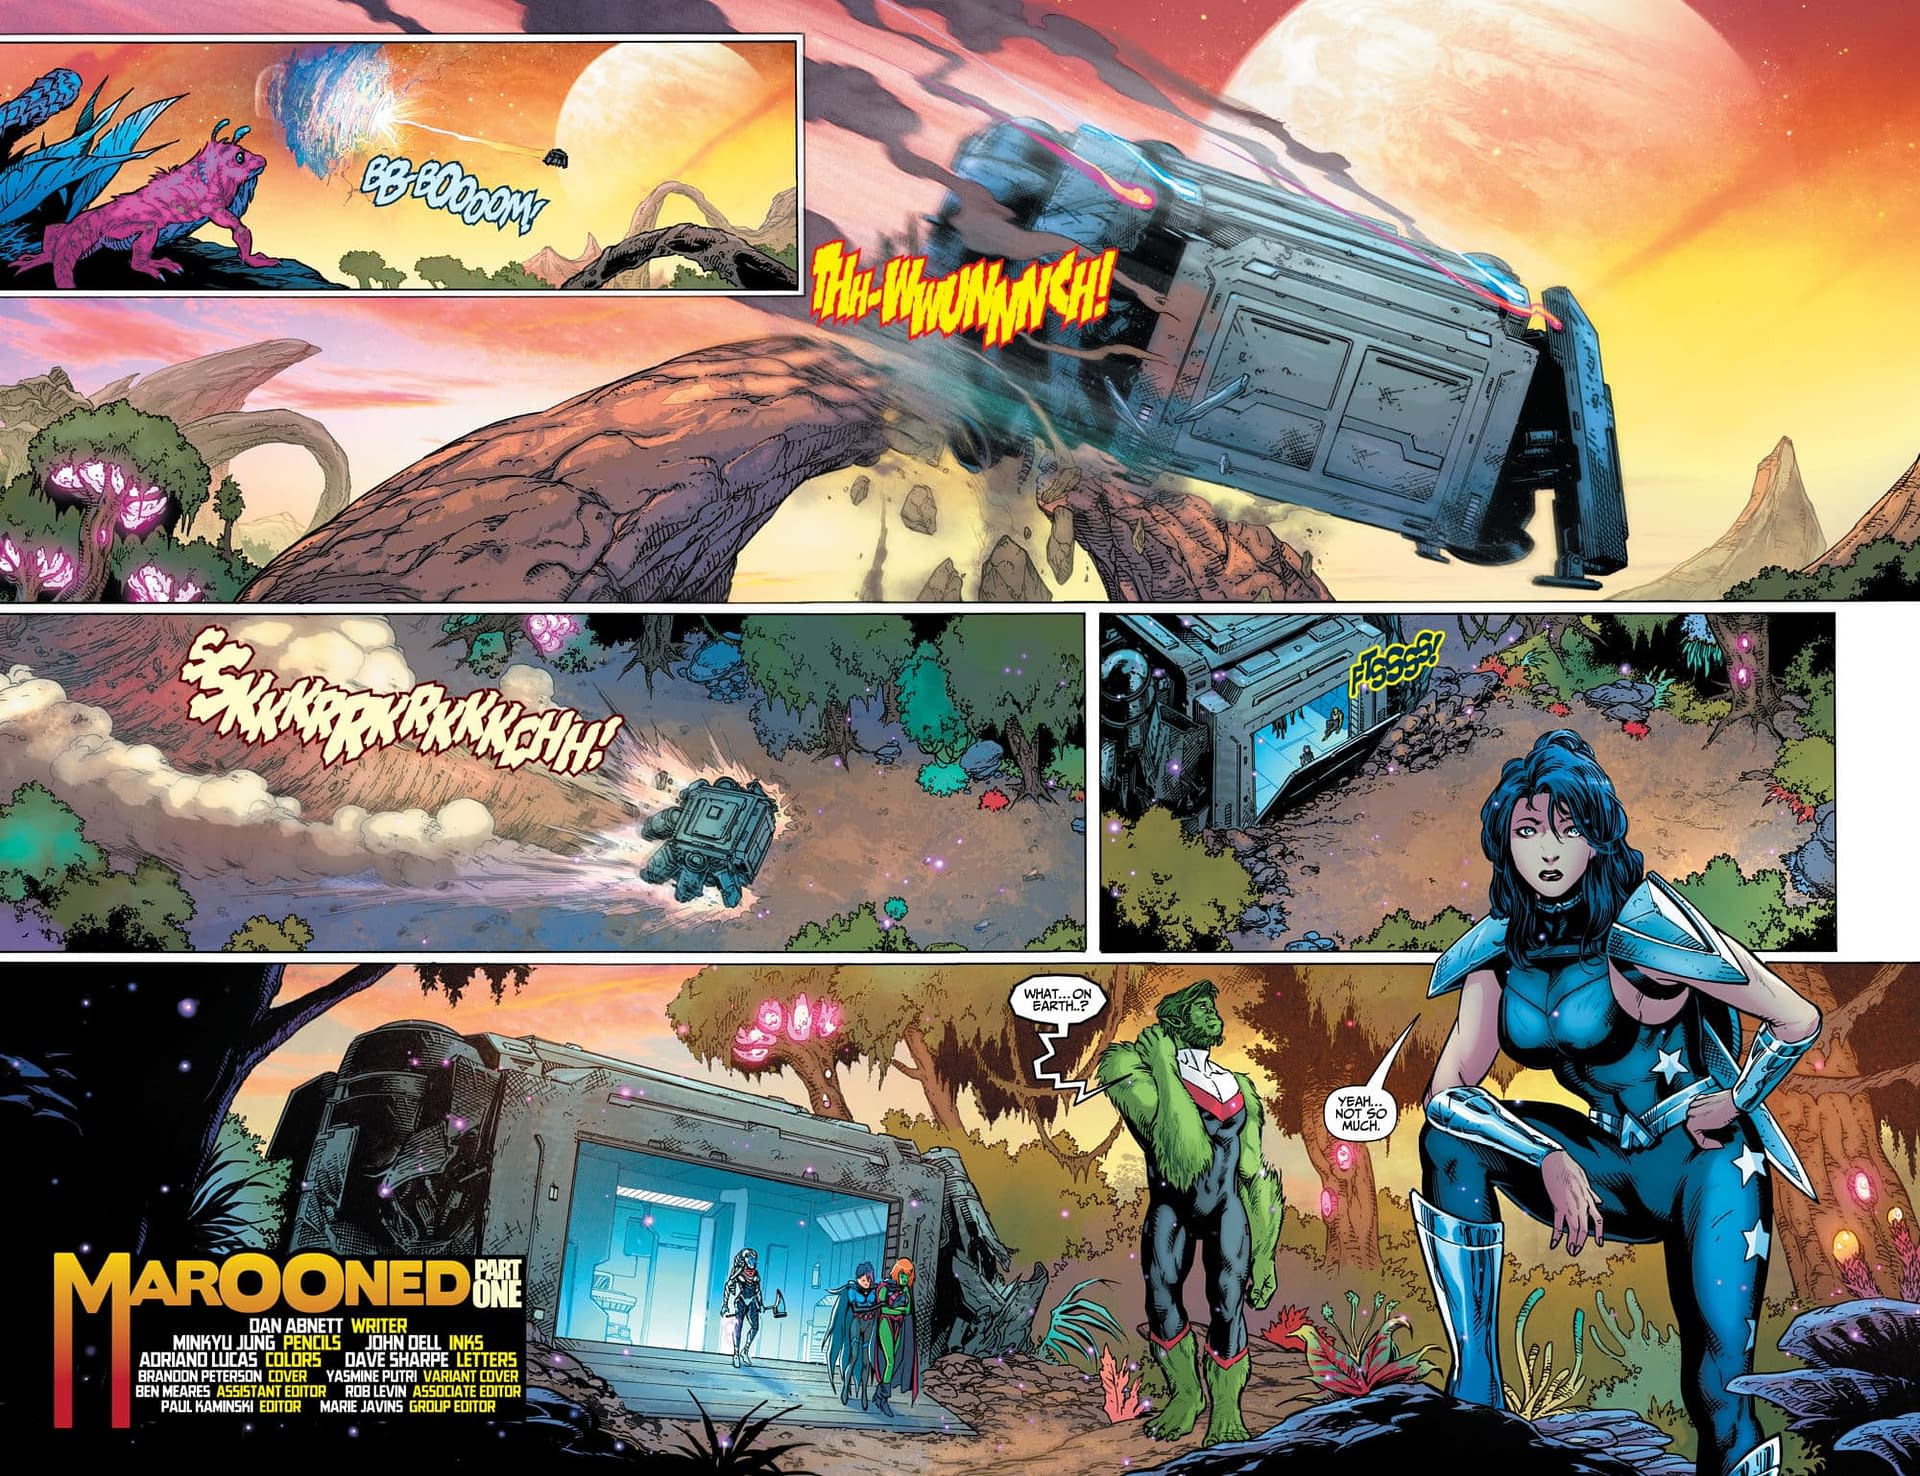 In Tomorrow's Titans #29, the Team Faces Their Greatest Villain: Hunger